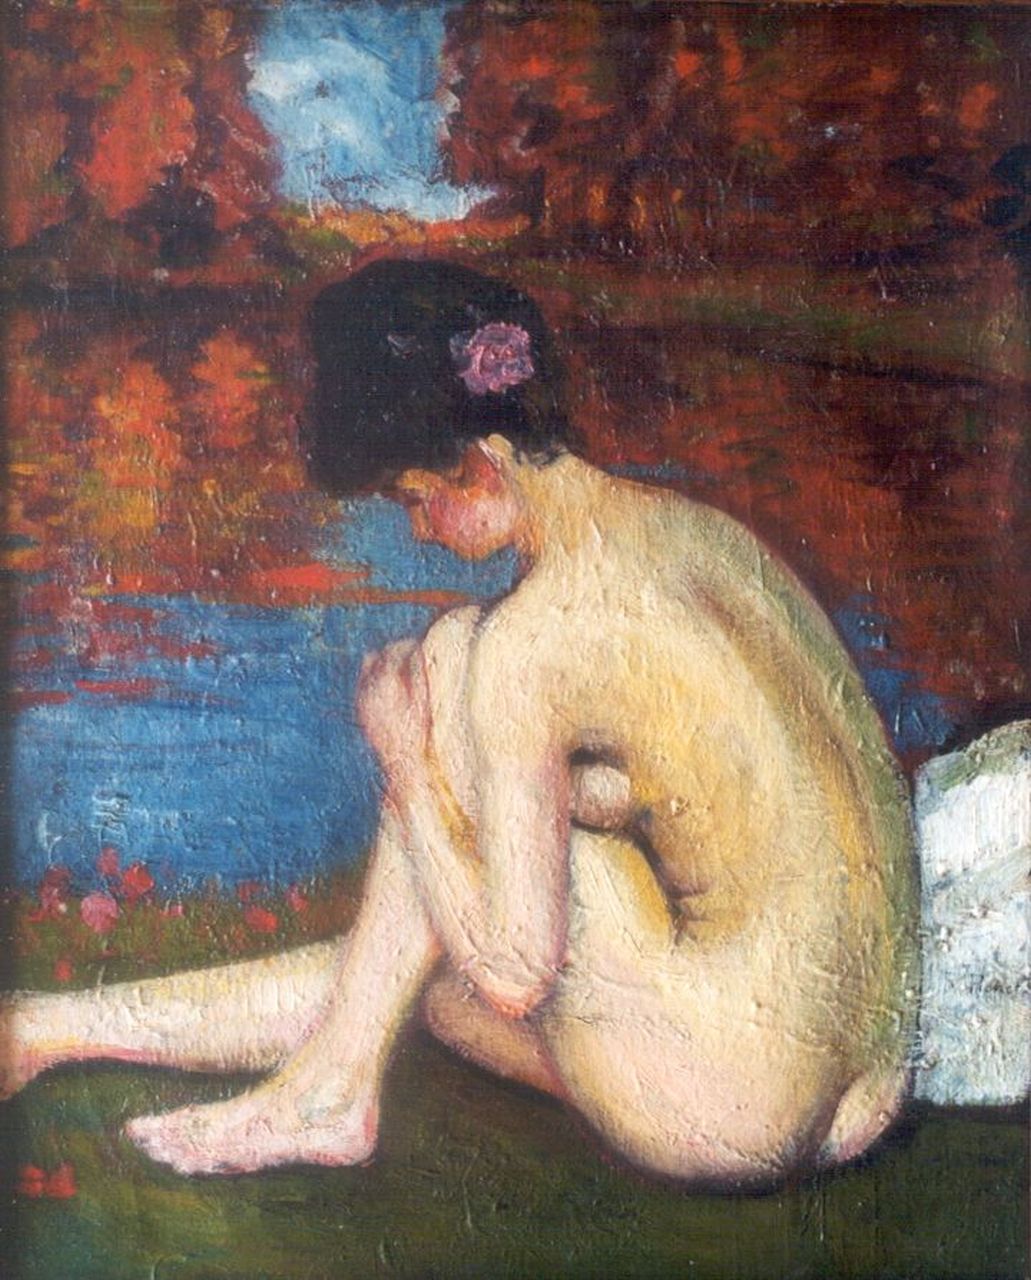 Ramon Antonio Pichot Gironés | A seated nude, Öl auf Leinwand, 47,5 x 38,5 cm, signed l.r.